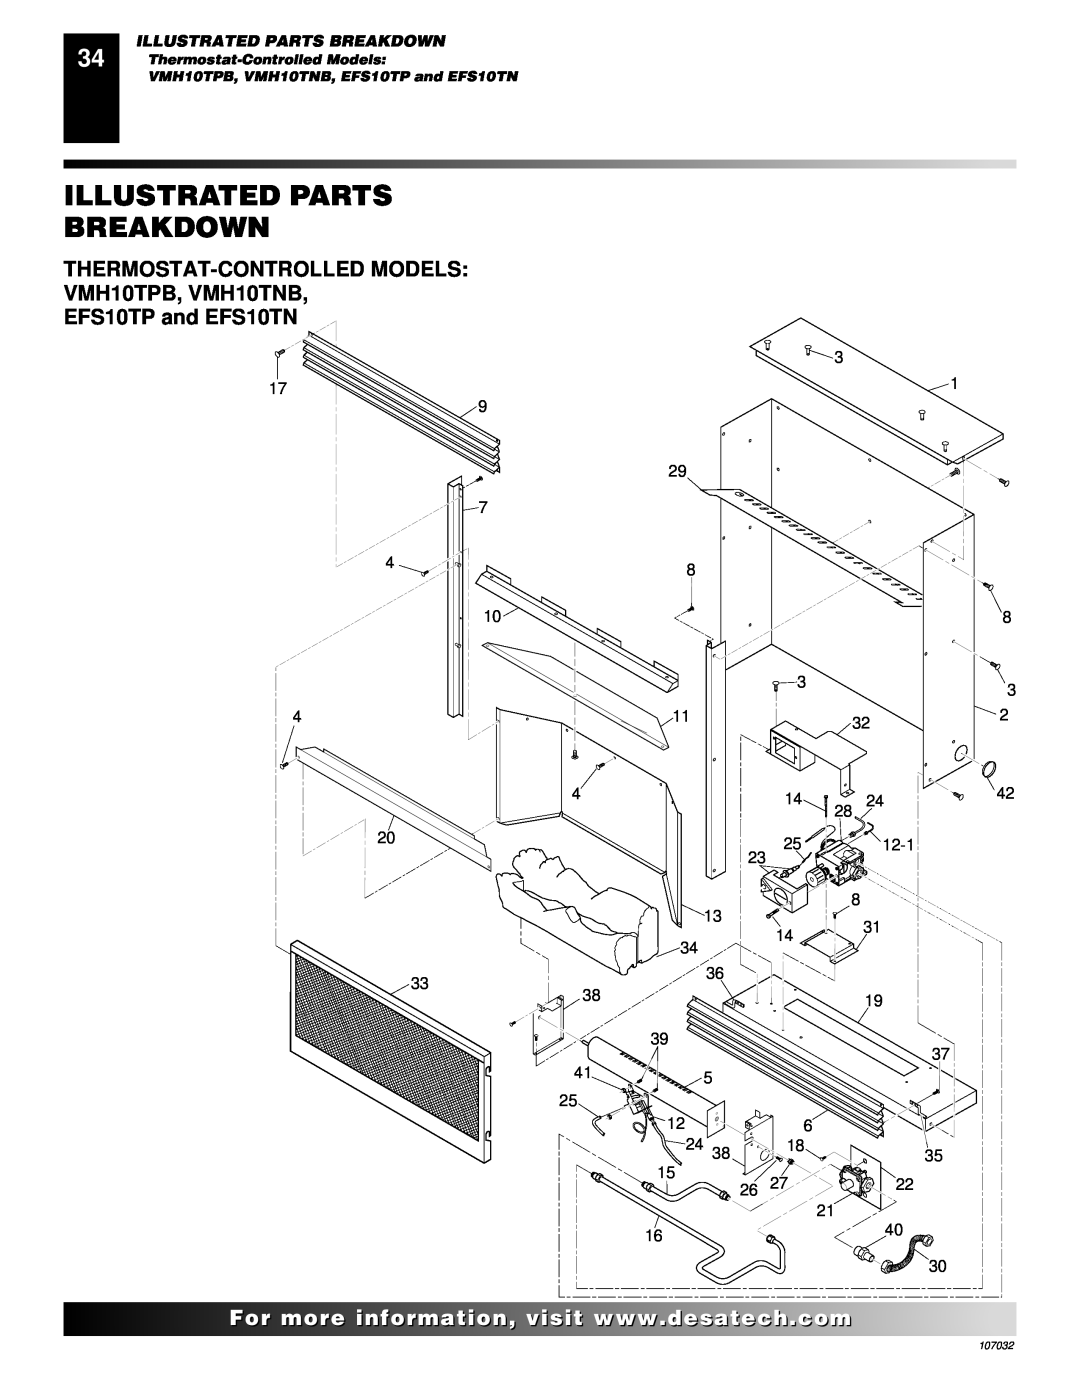 Desa Illustrated Parts Breakdown, THERMOSTAT-CONTROLLEDMODELS VMH10TPB, VMH10TNB, EFS10TP and EFS10TN 